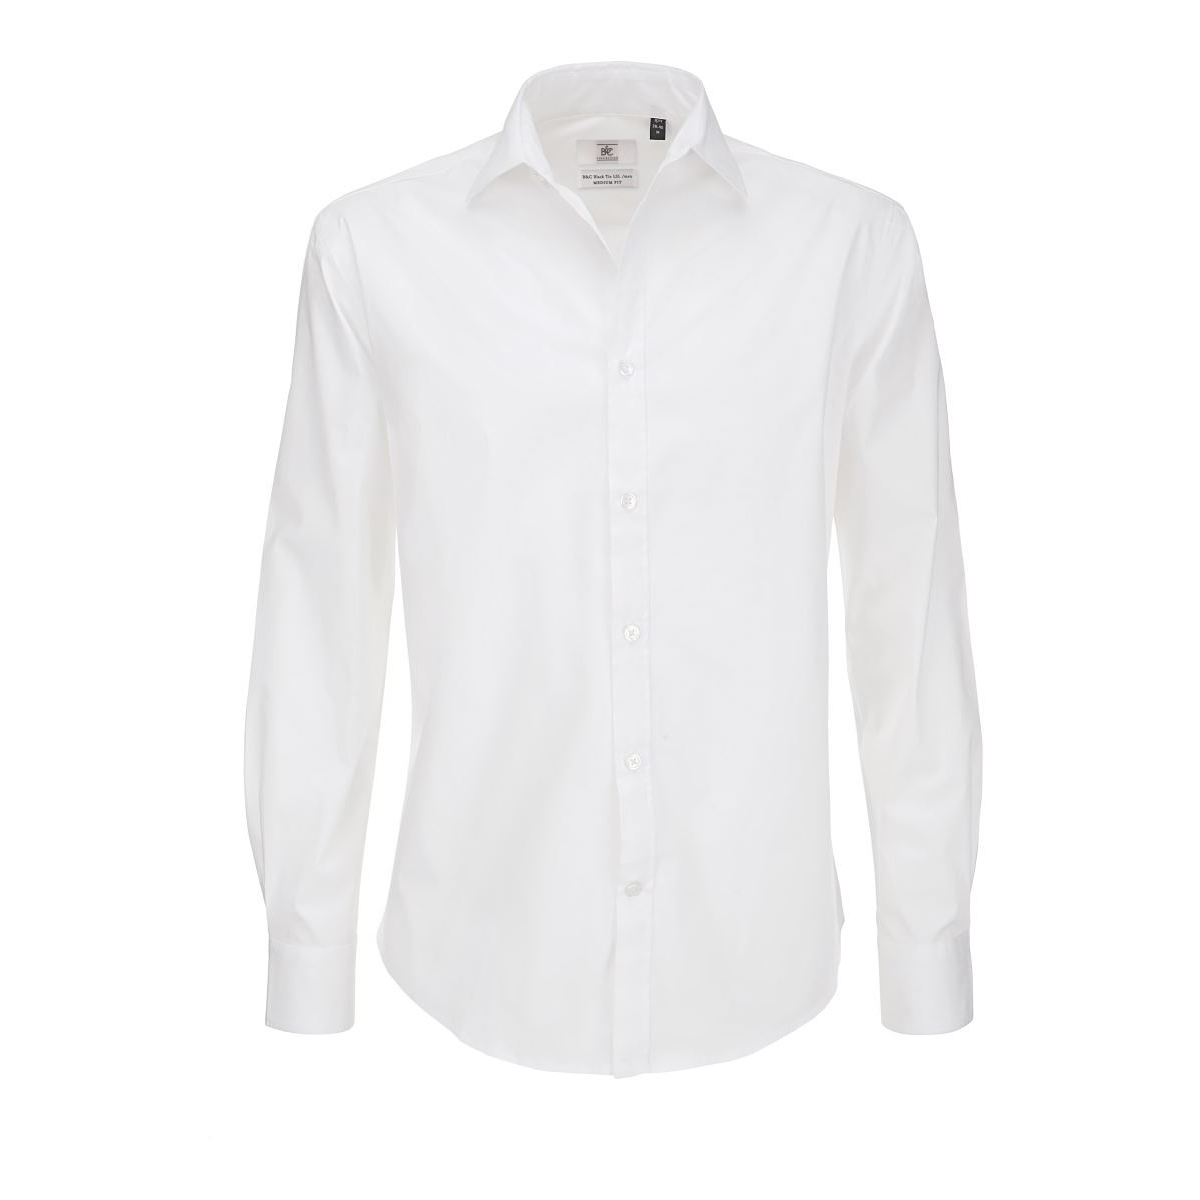 Pánská popelínová košile B&C Black Tie s dlouhým rukávem - bílá, 3XL